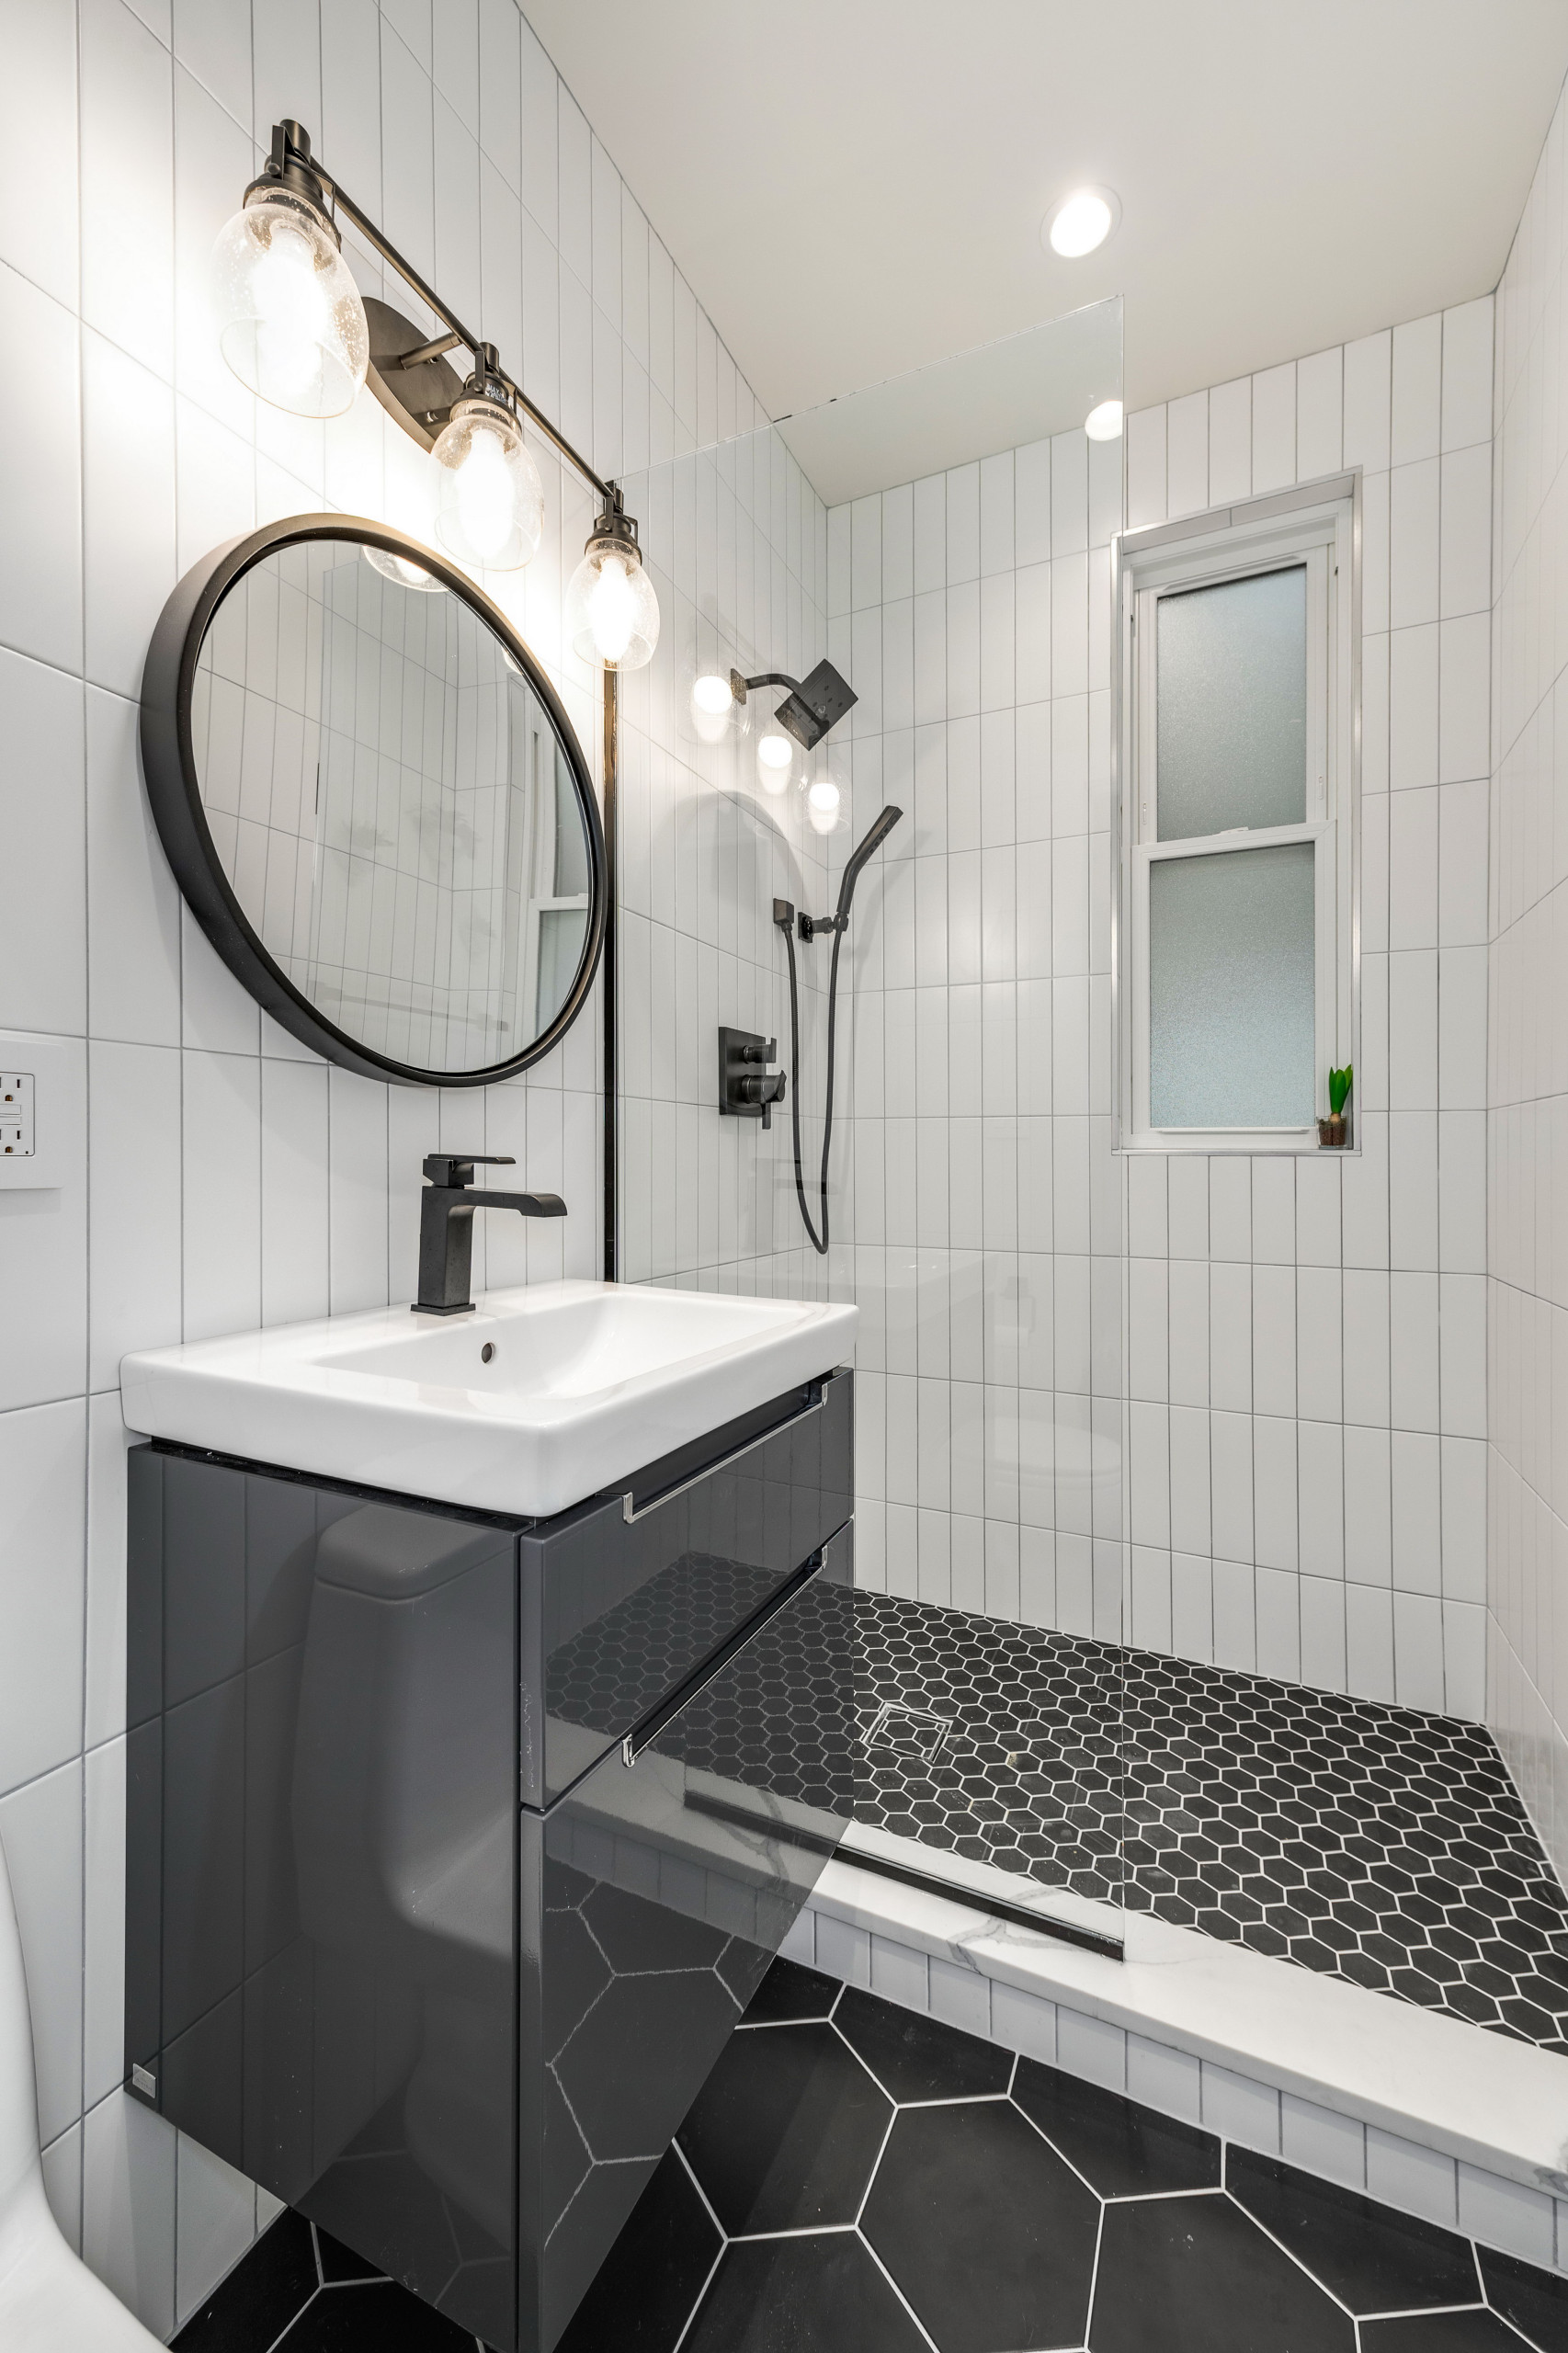 8 All-Black Bathroom Design Ideas That Effortlessly Amp Up the